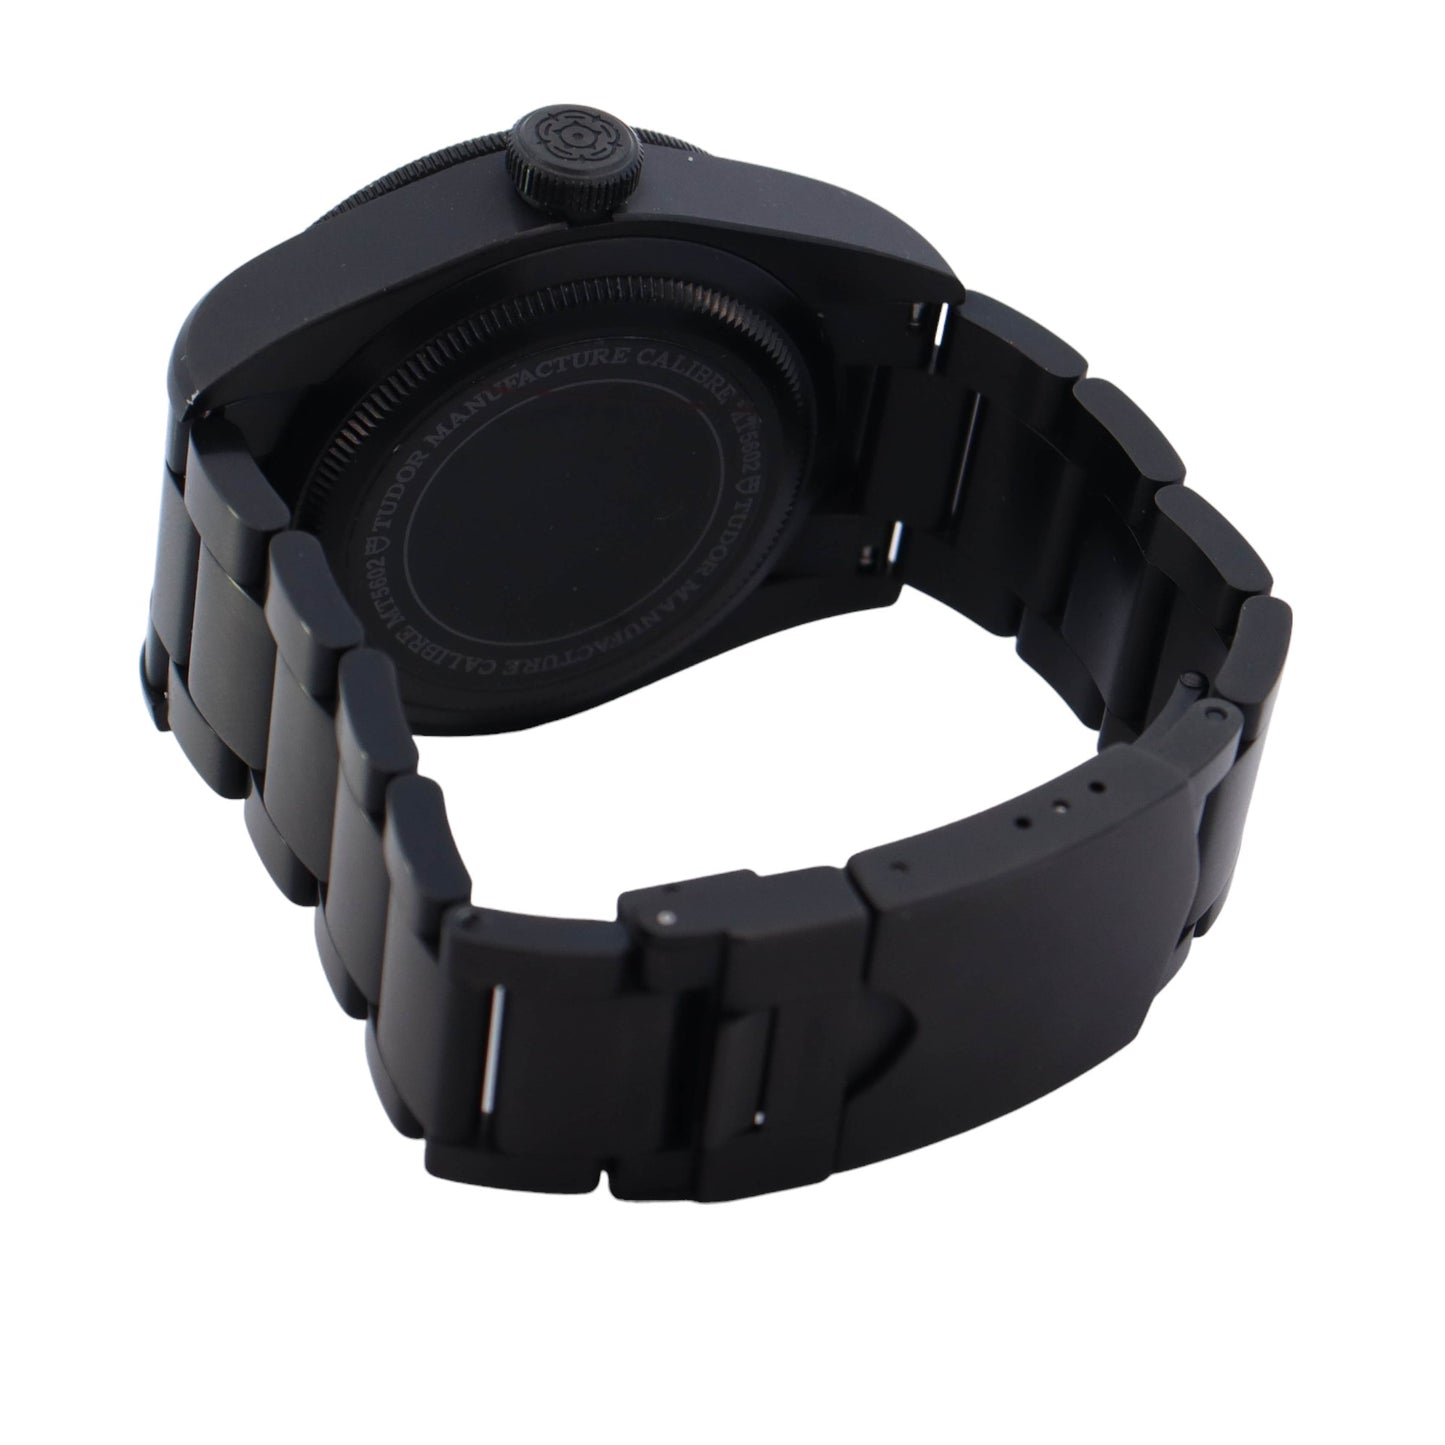 Tudor Black Bay PVD Stainless Steel 41mm Black Dot Dial Watch Reference #: 79230DK - Happy Jewelers Fine Jewelry Lifetime Warranty